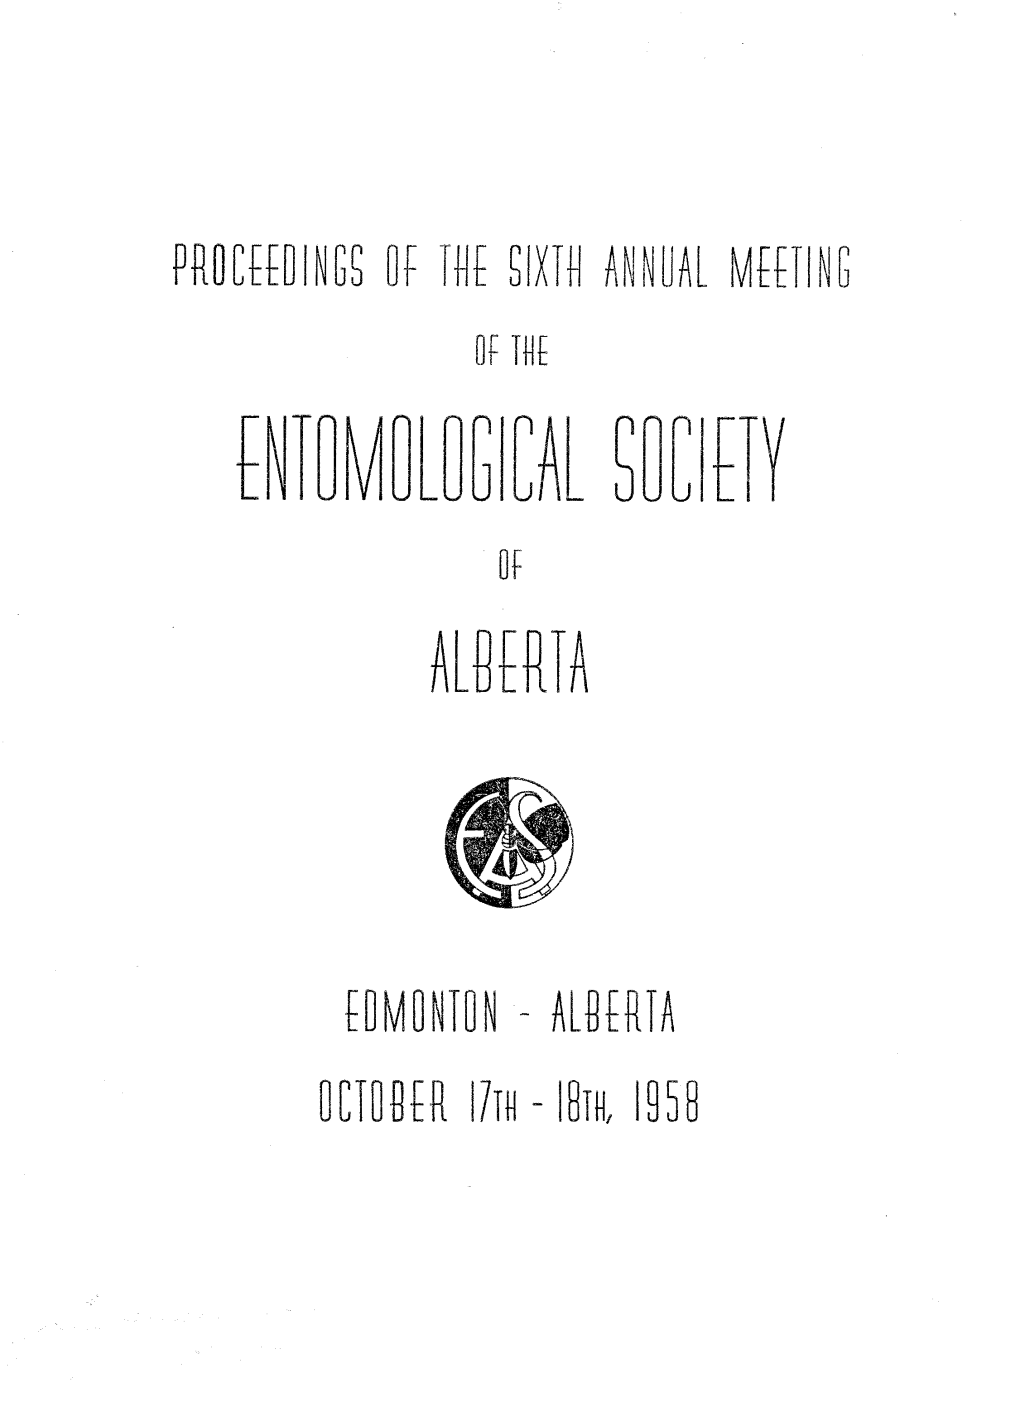 Proceedings of the Entomological Society of Alberta 1958